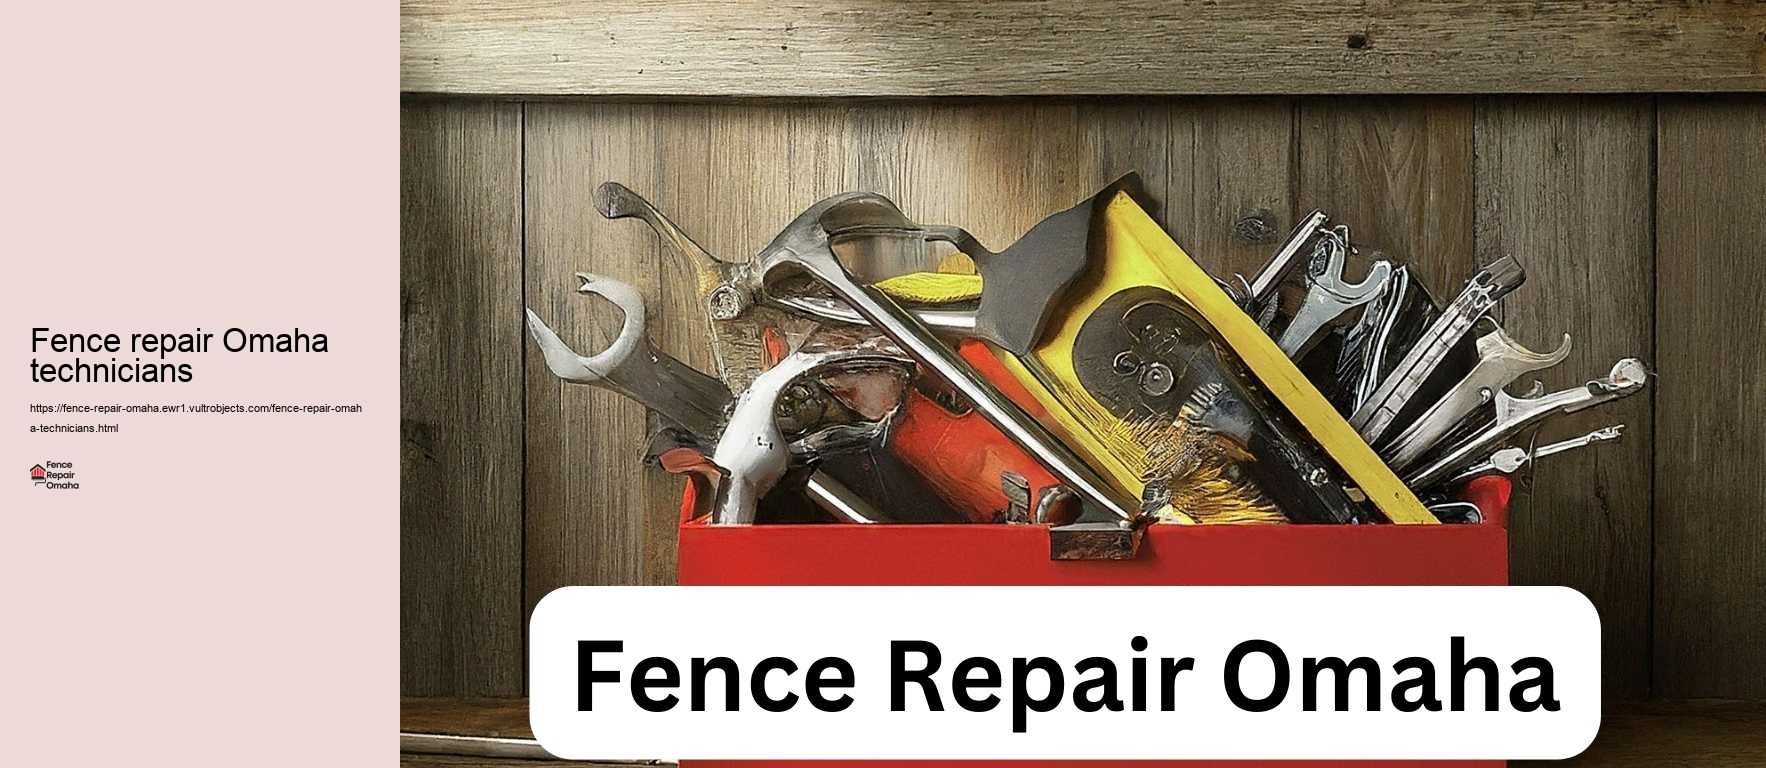 Fence repair Omaha technicians